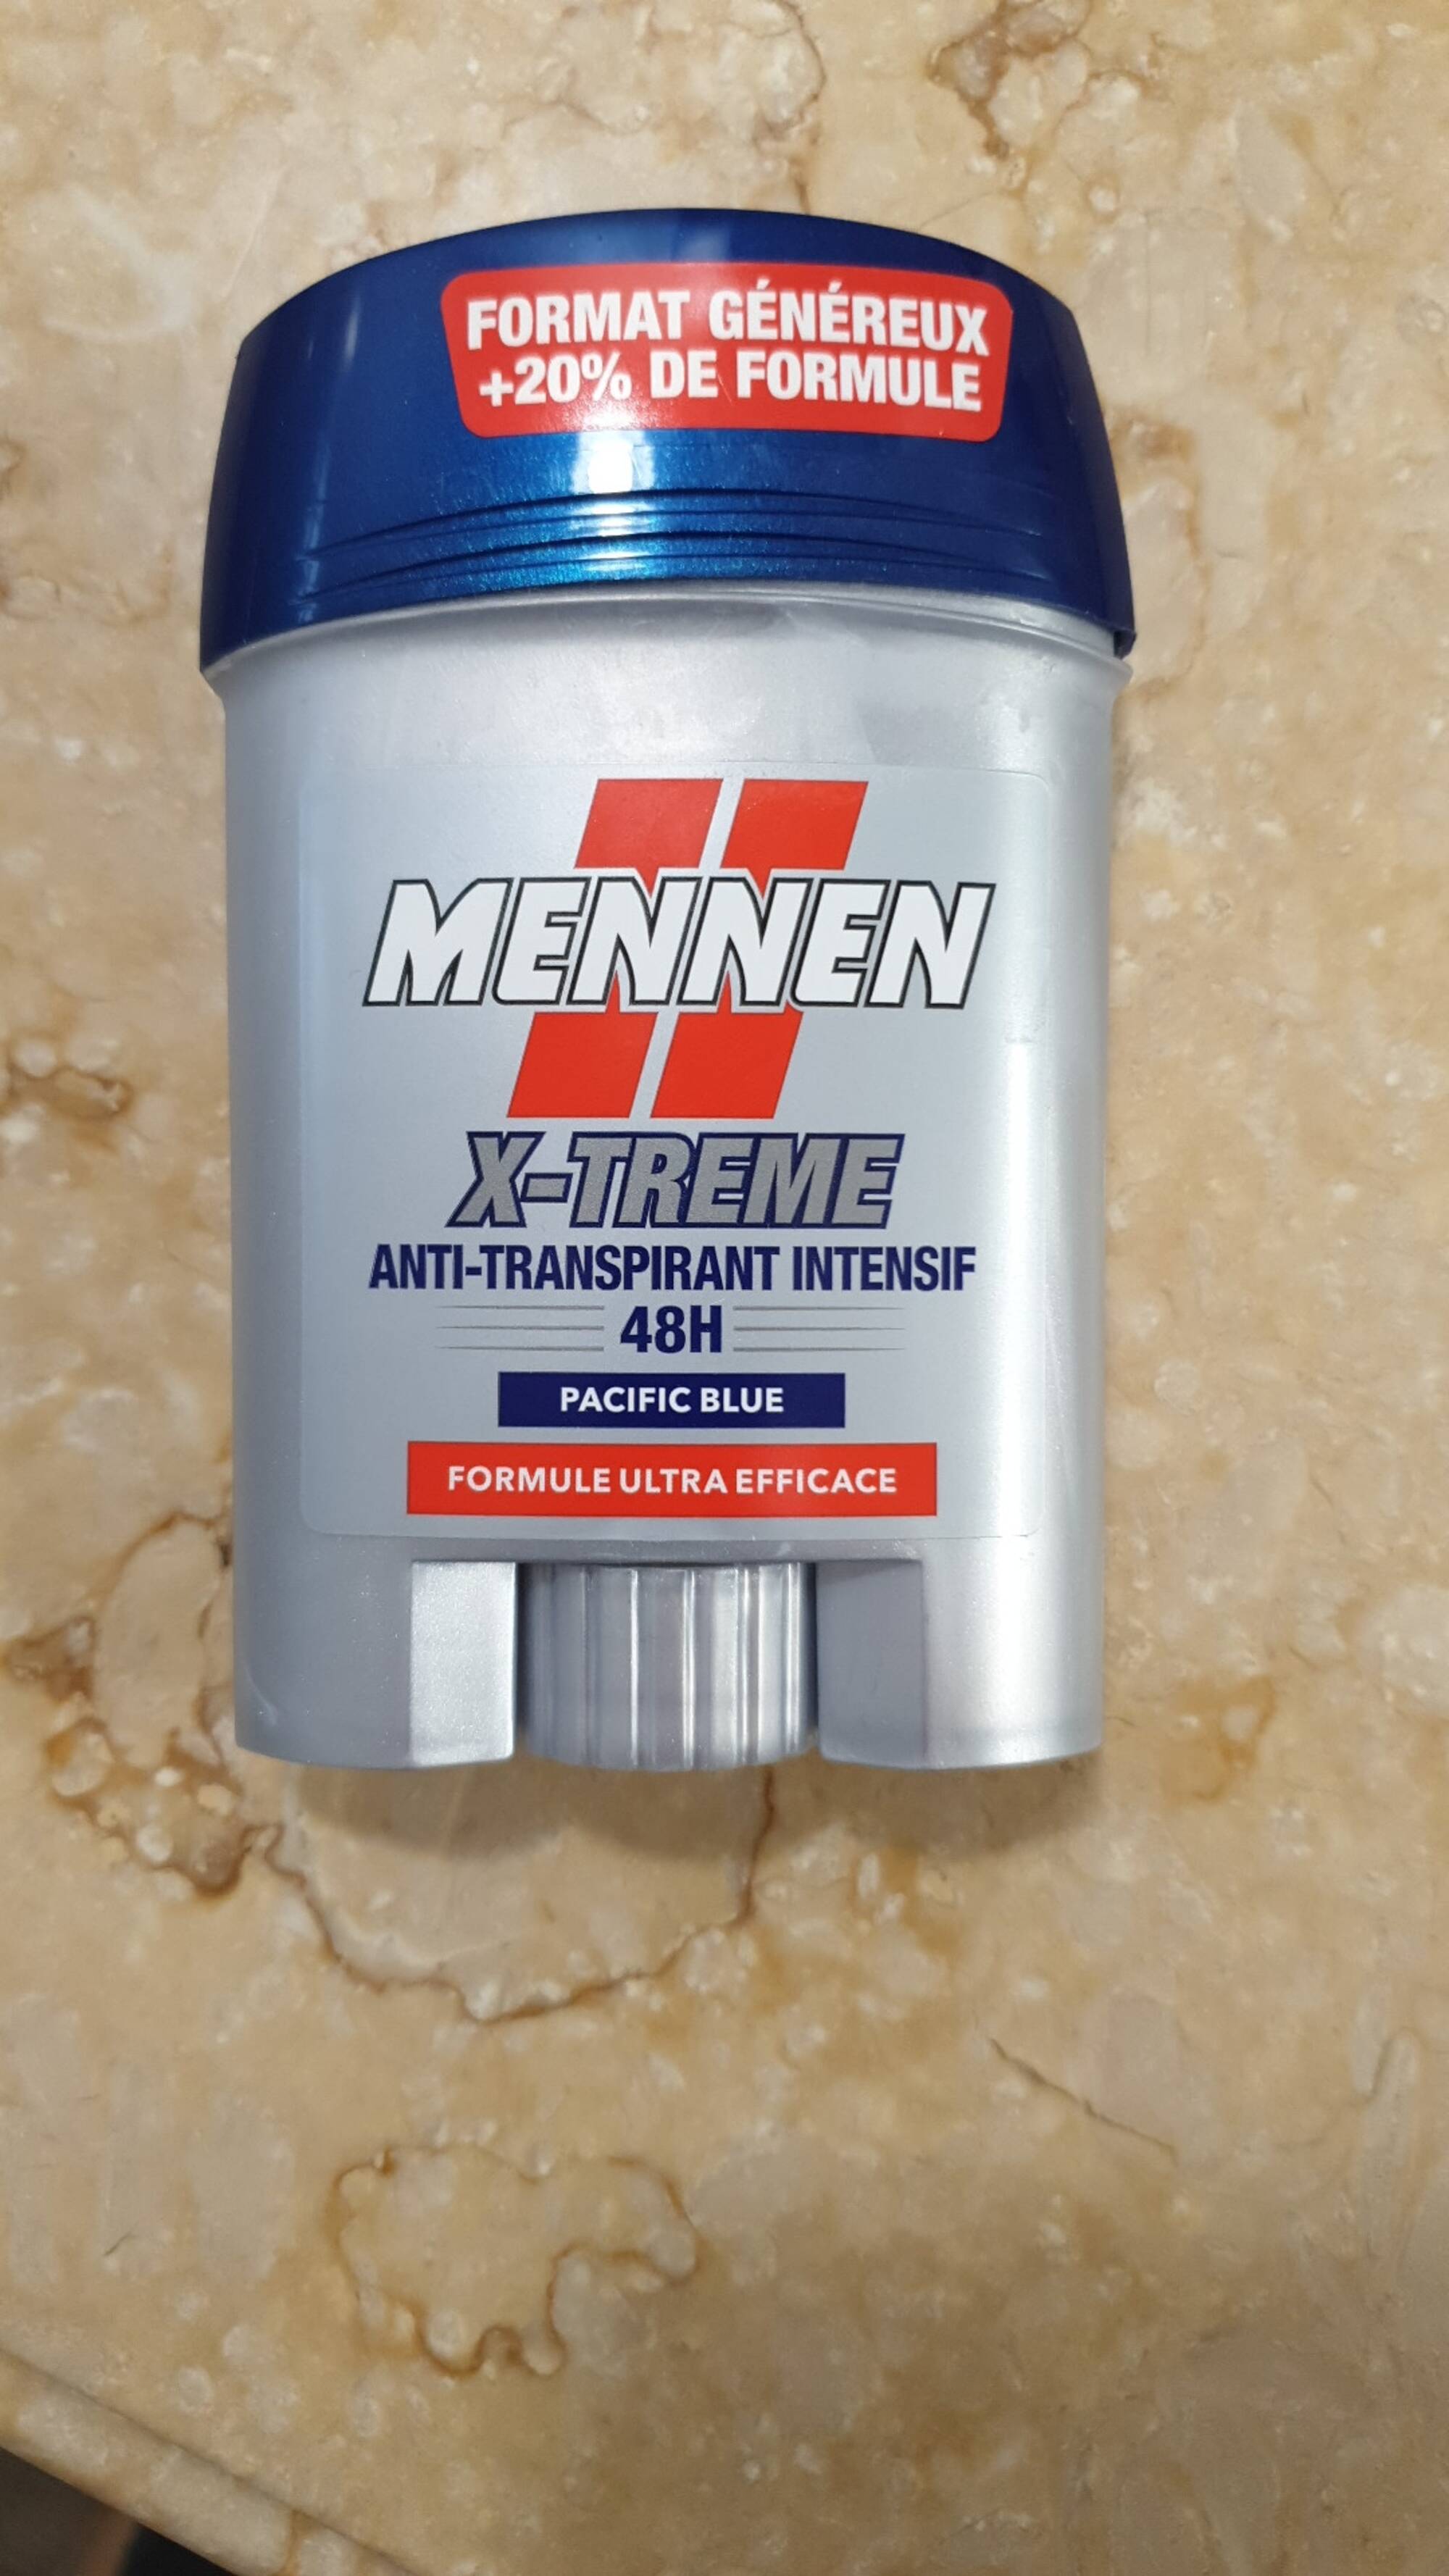 MENNEN - X-treme - Anti-transpirant intensif 48h